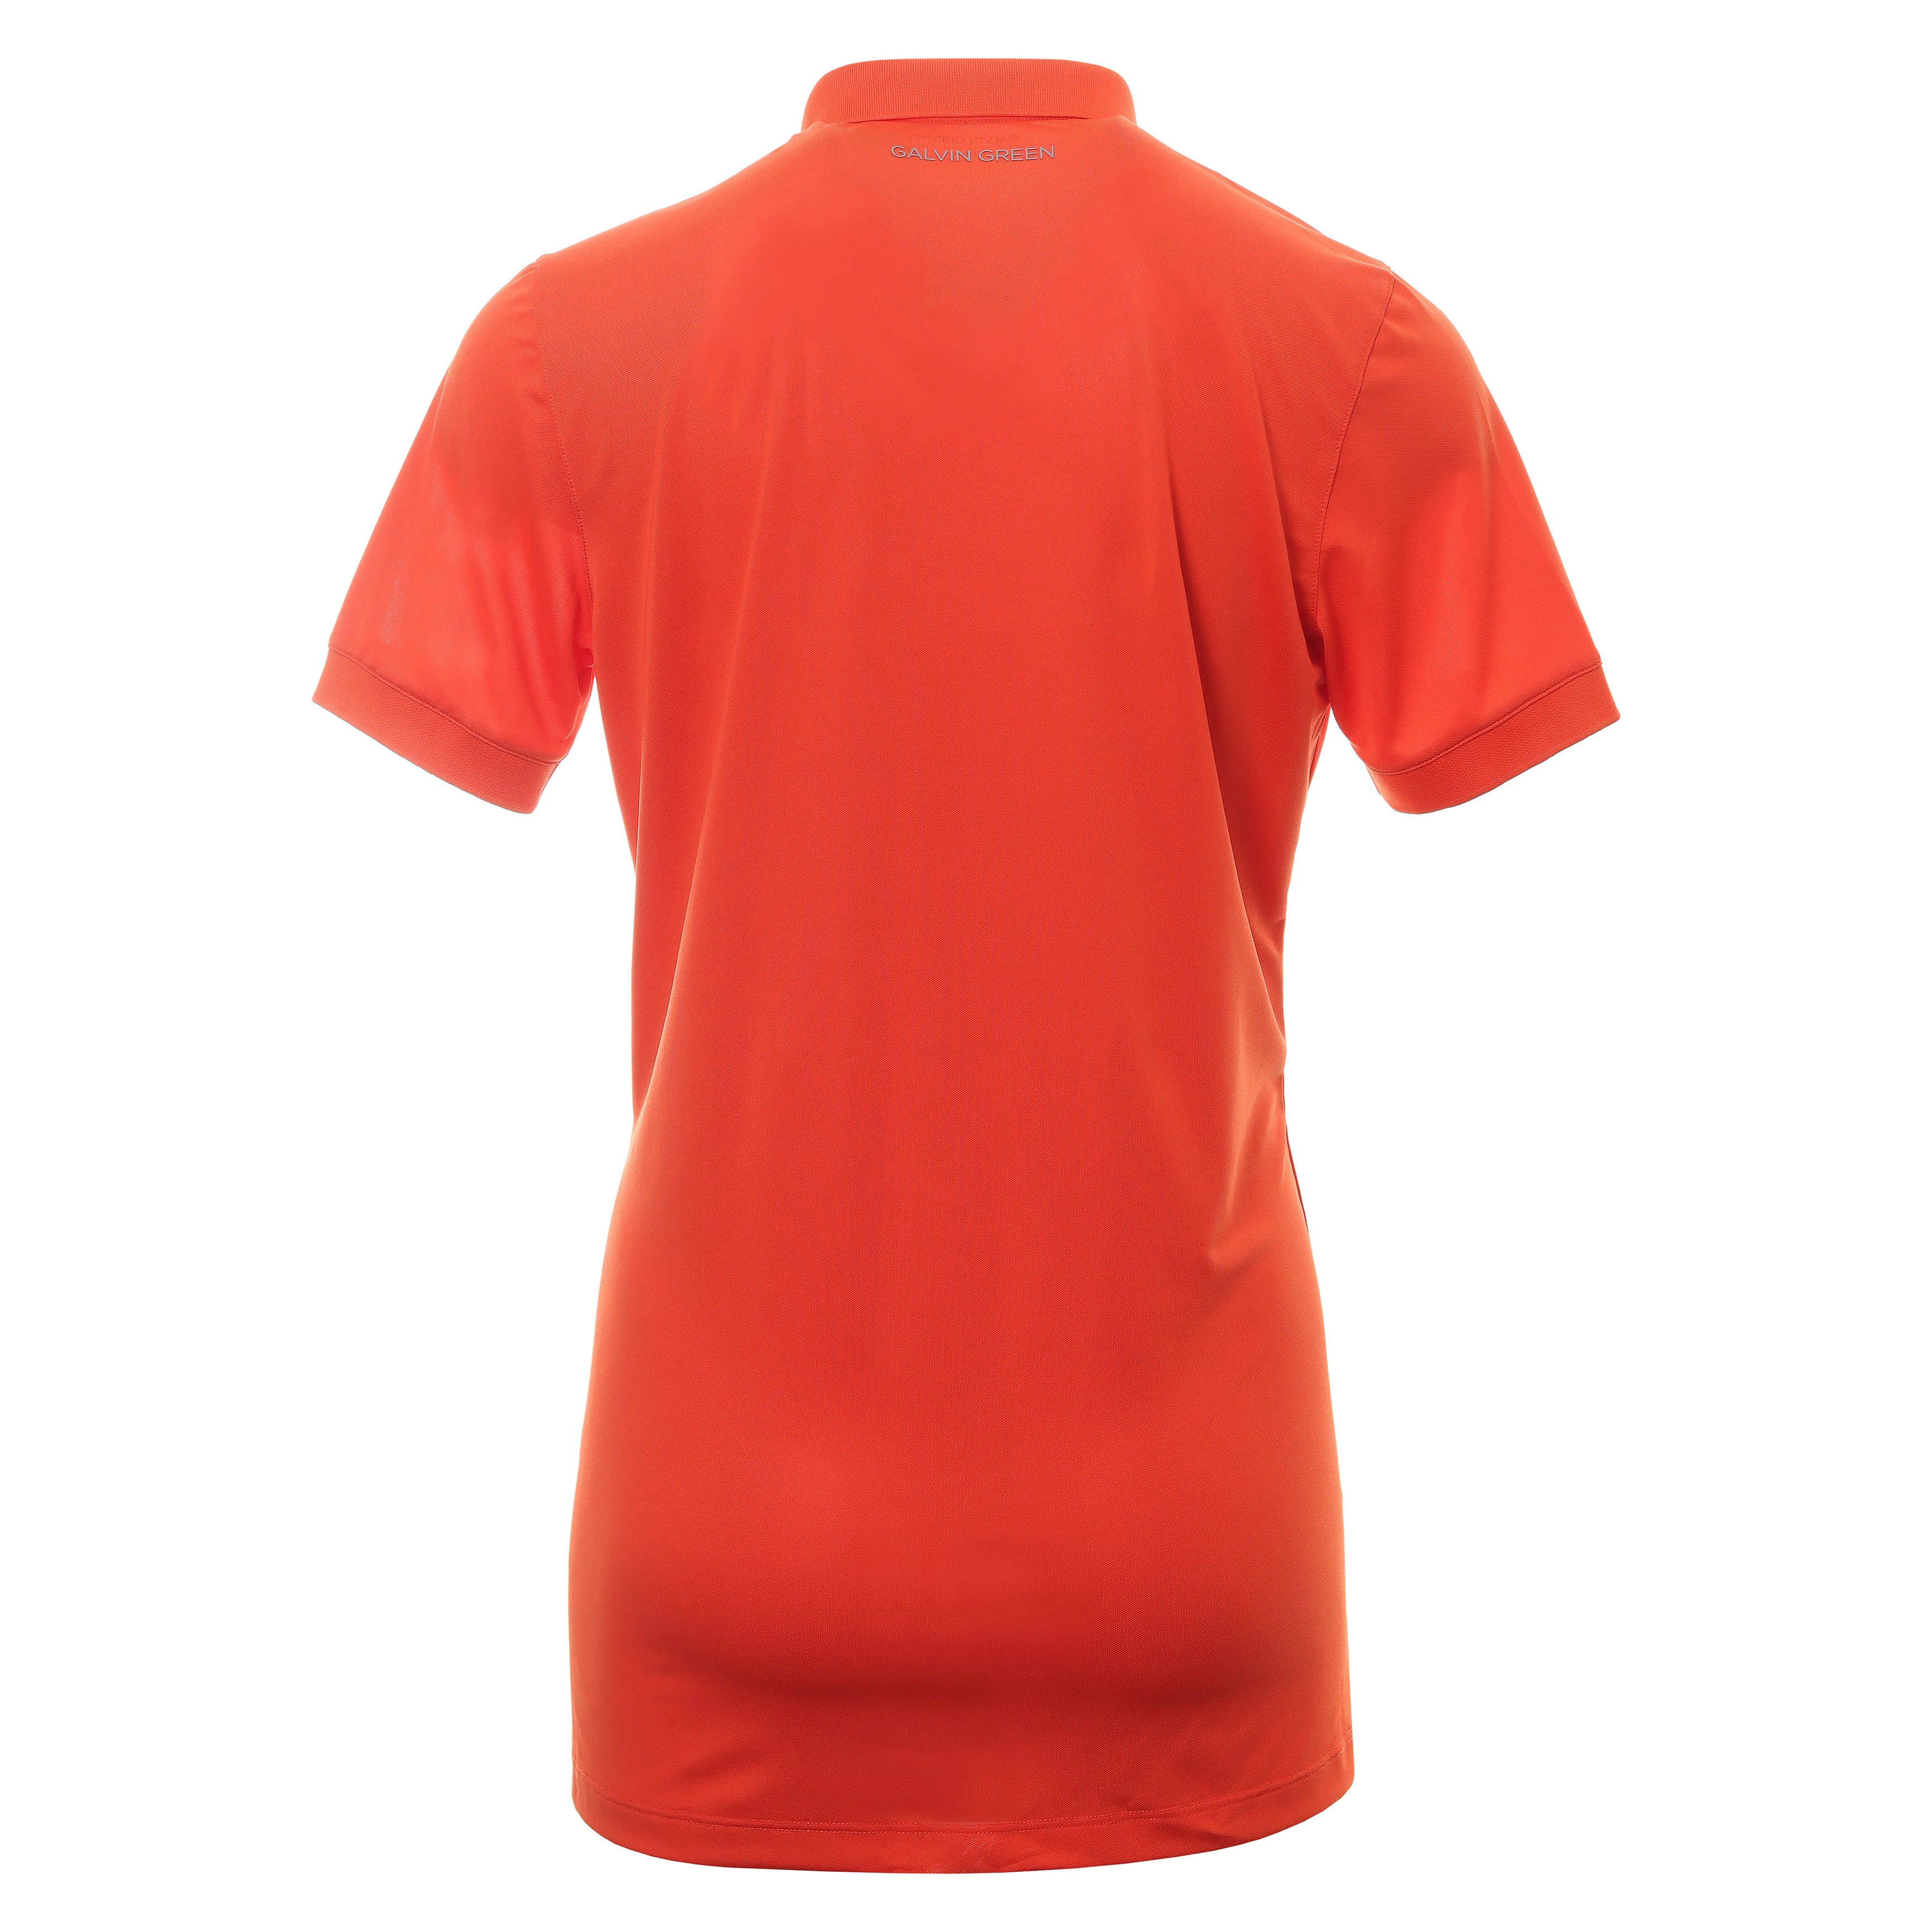 Galvin Green Max Tour Ventil8+ Golf Shirt Orange 9394 | Function18